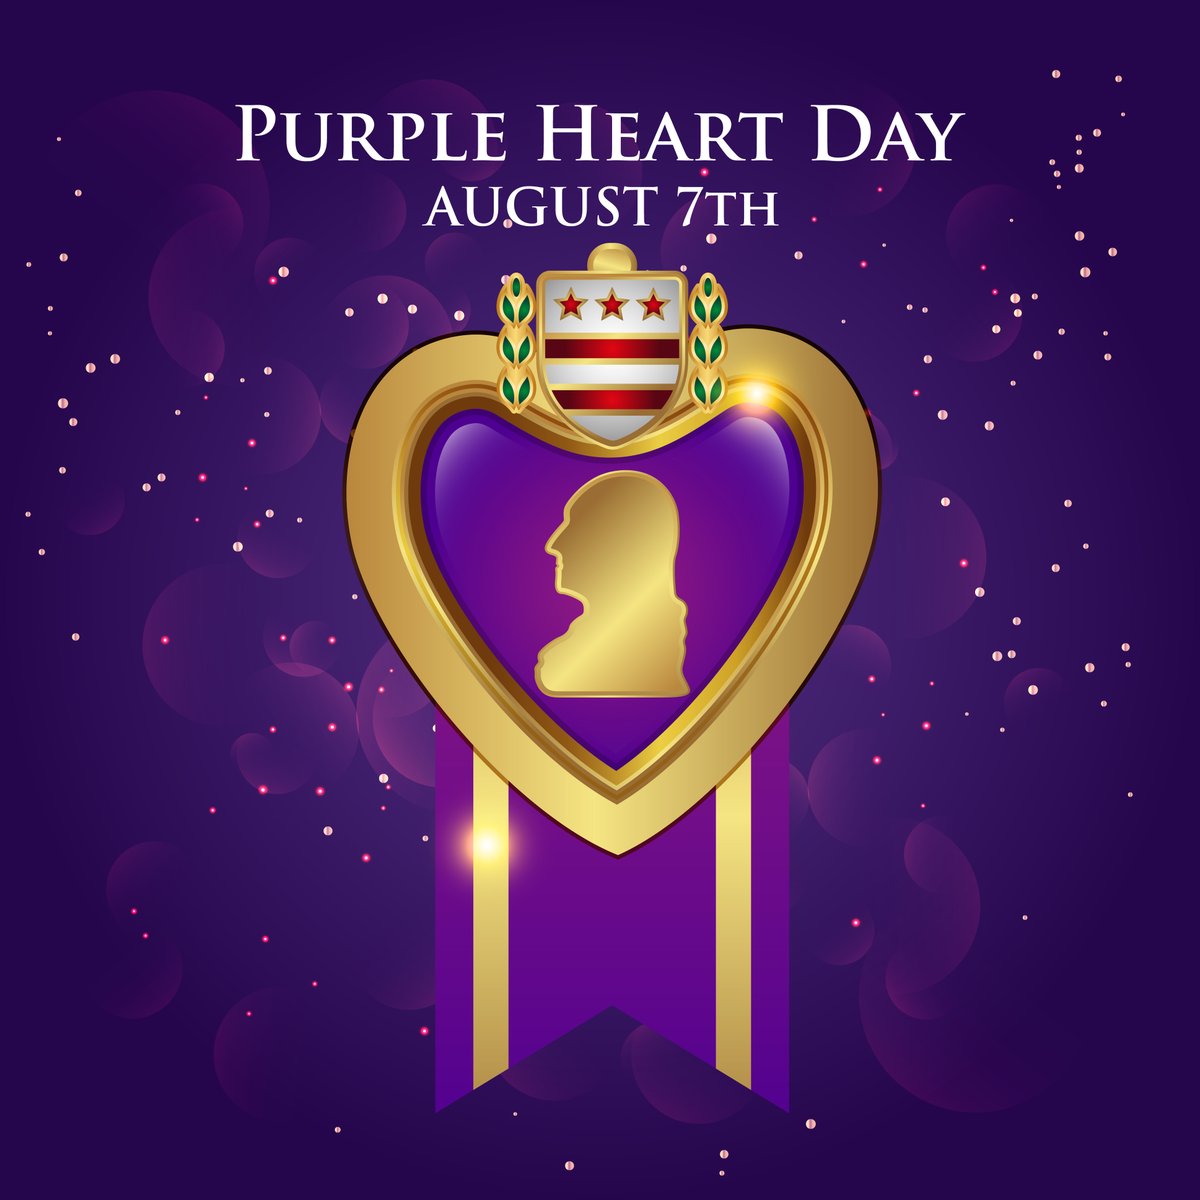 Purple heart перевод. Пурпурные сердца. День пурпурного сердца 7 августа. Перпл Харт. Пурпурное сердце фиолетовая.